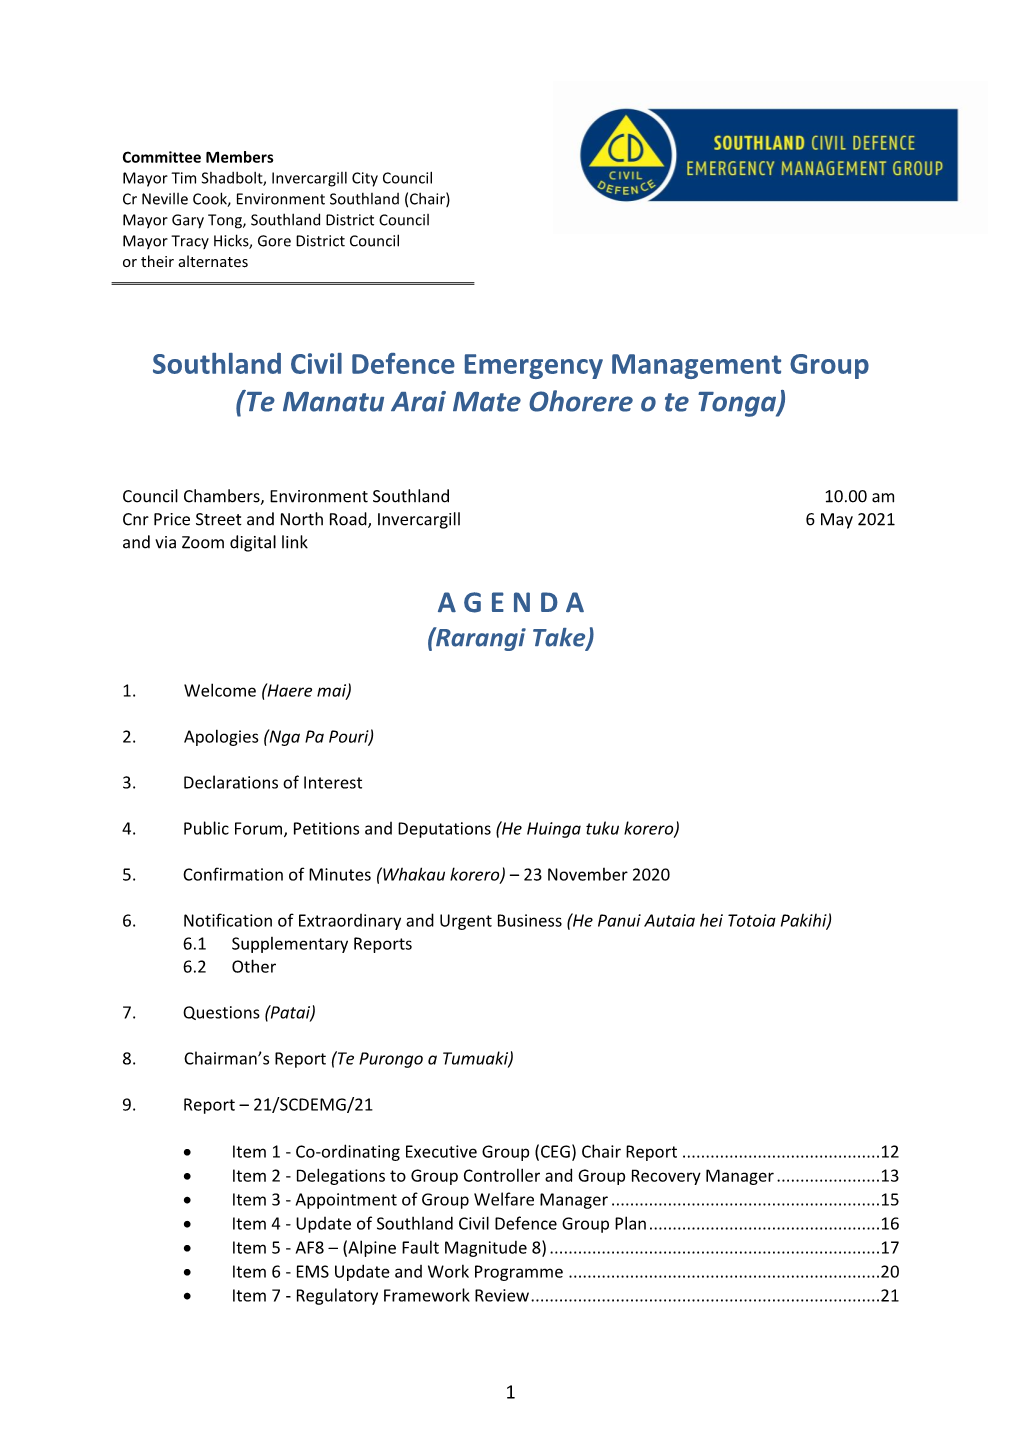 Southland Civil Defence Emergency Management Group Agenda